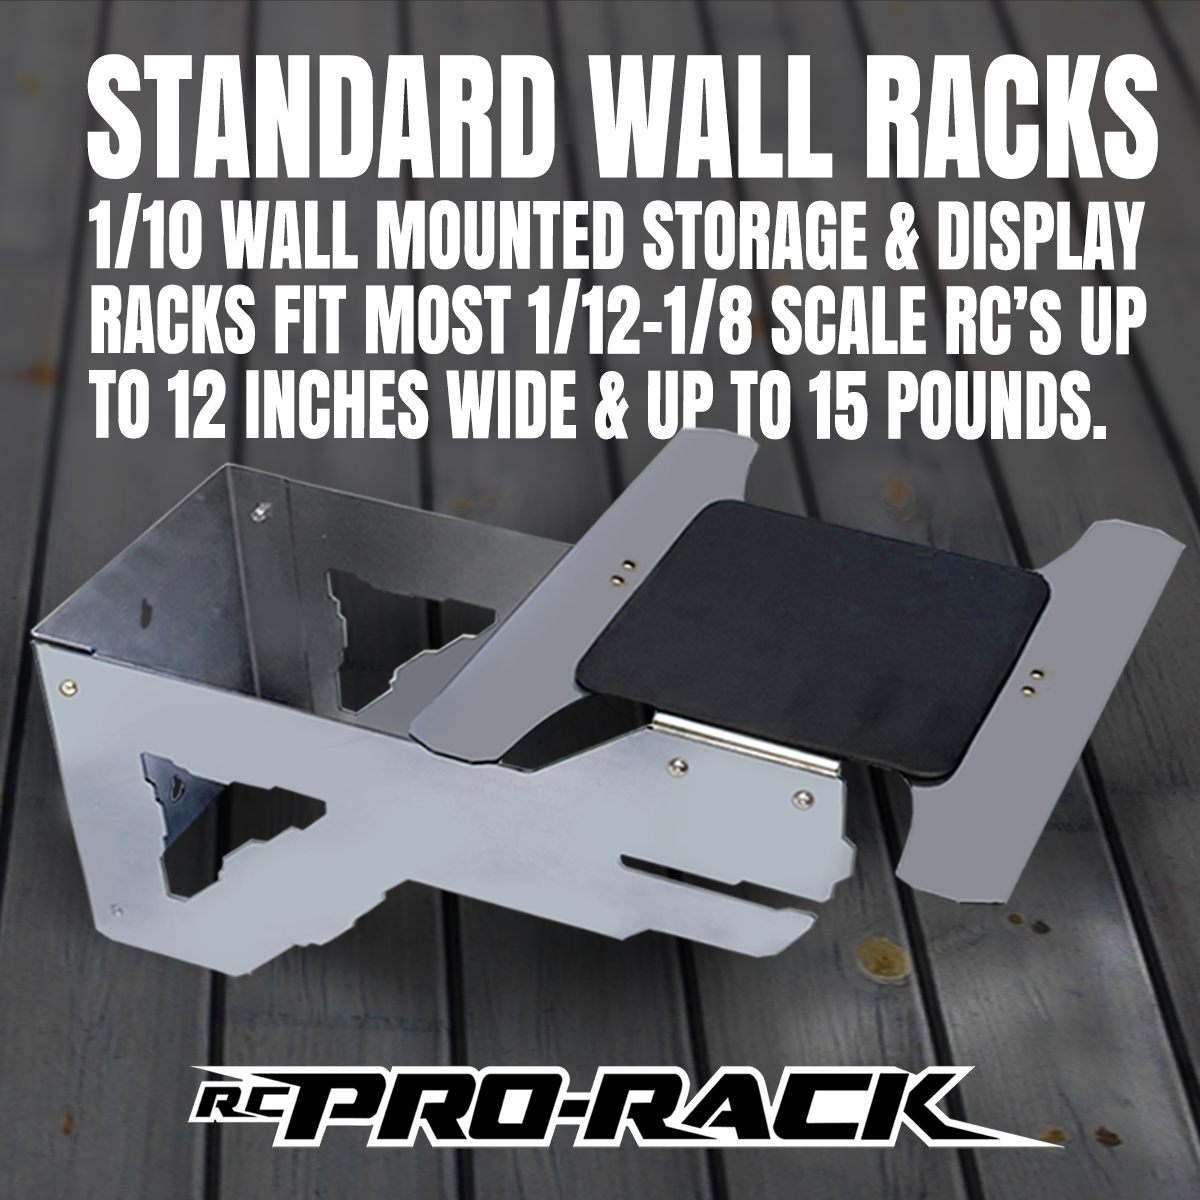 RC PRO RACK 1/10 STANDARD WALL MOUNTED STORAGE & DISPLAY RACK